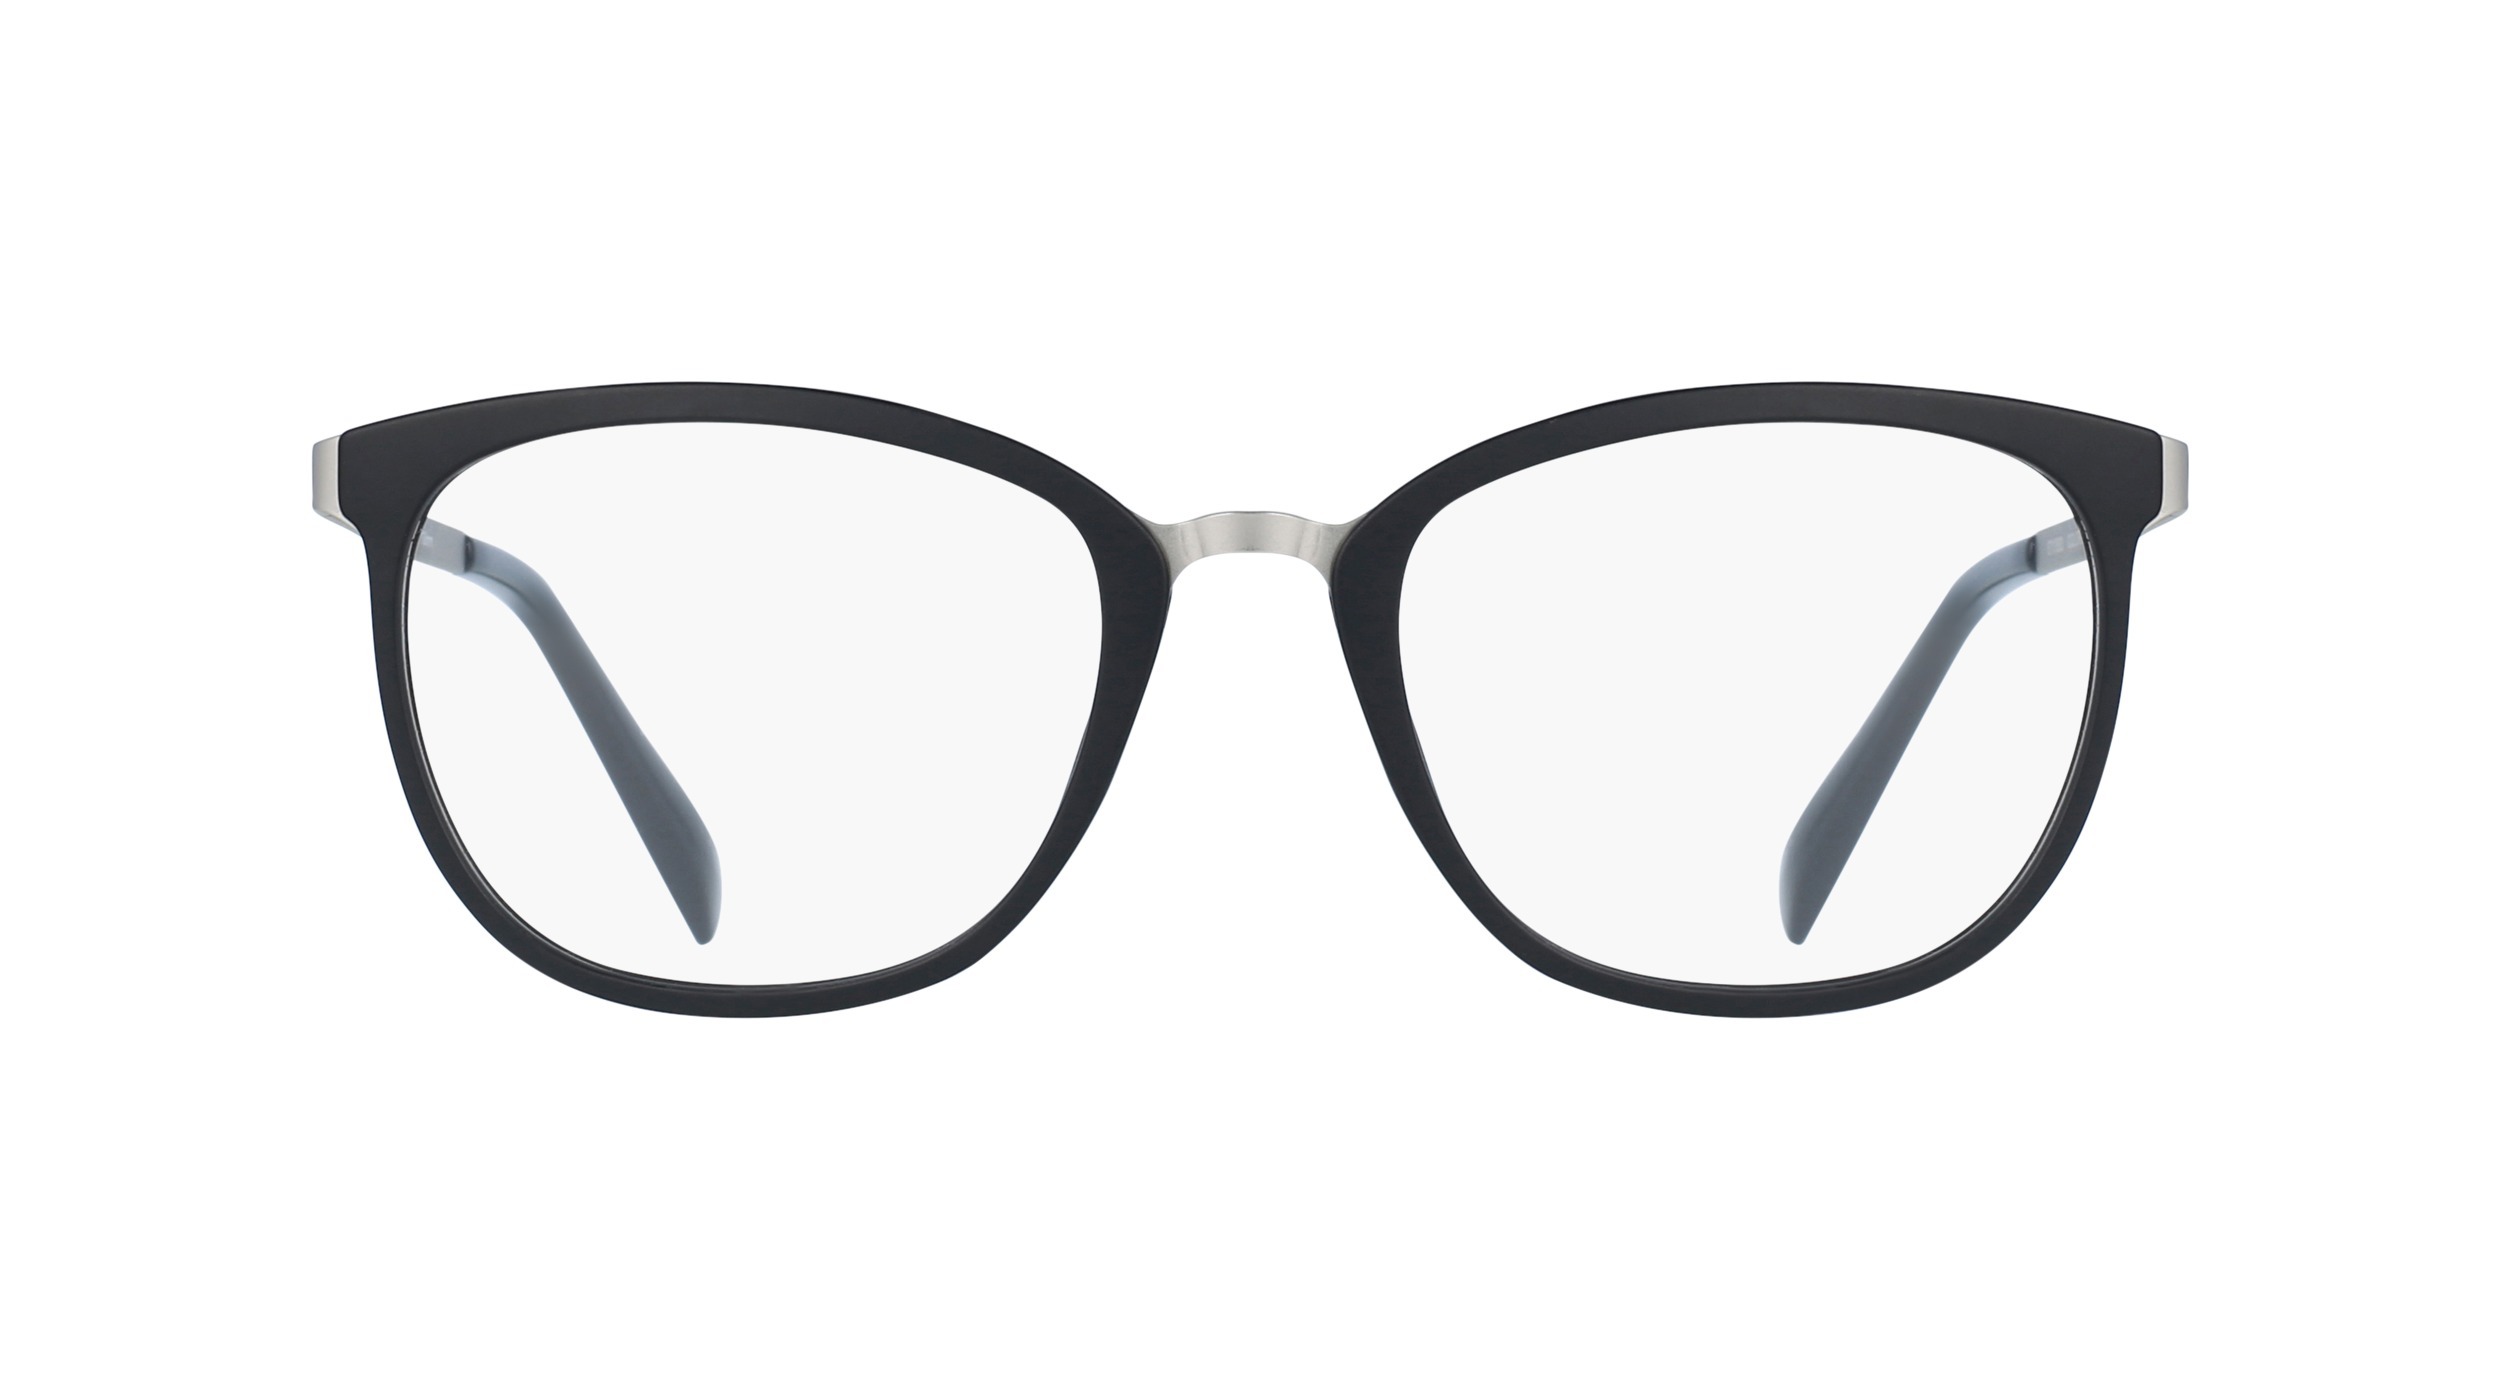 optic2000-lunettes-esprit